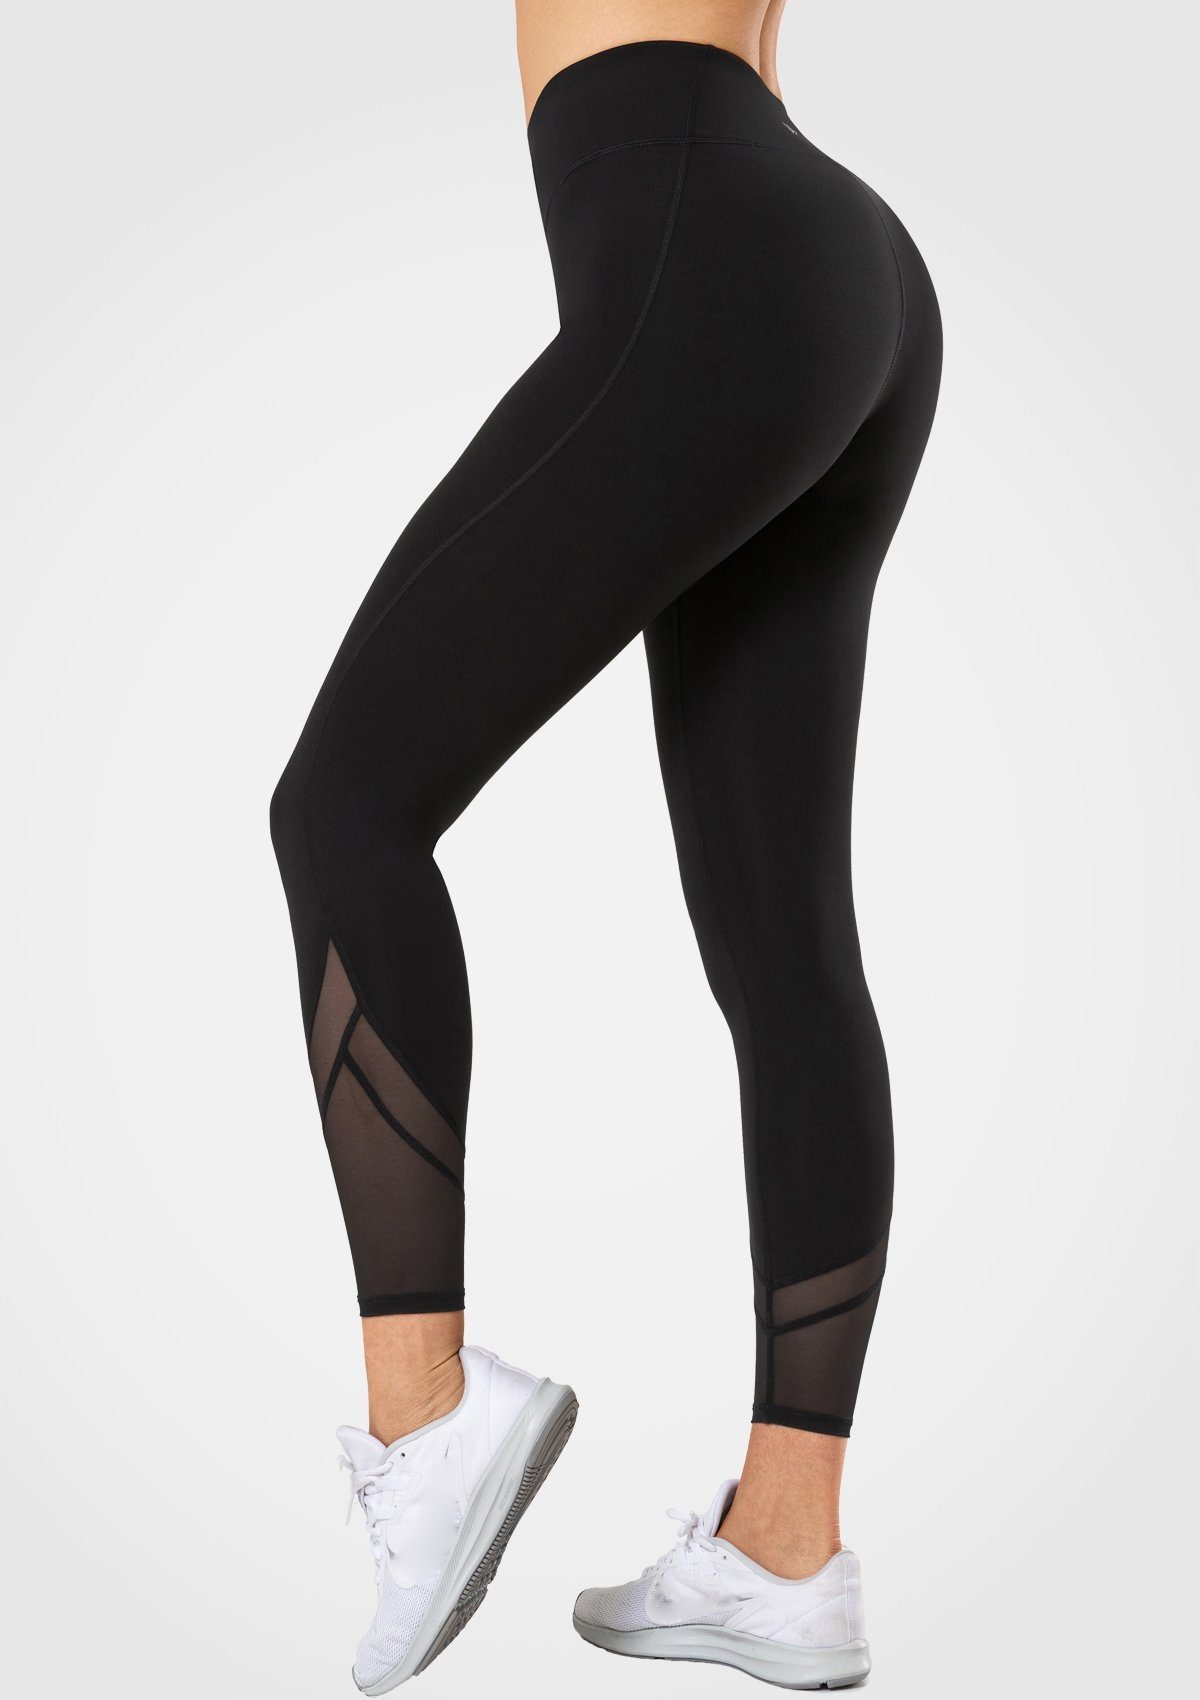 Yvette Leggings Hohe Taille, Blickdicht, mit Mesh, Fitness Yoga Sport  Hosen, Streetwear - S110185A02 online kaufen | OTTO